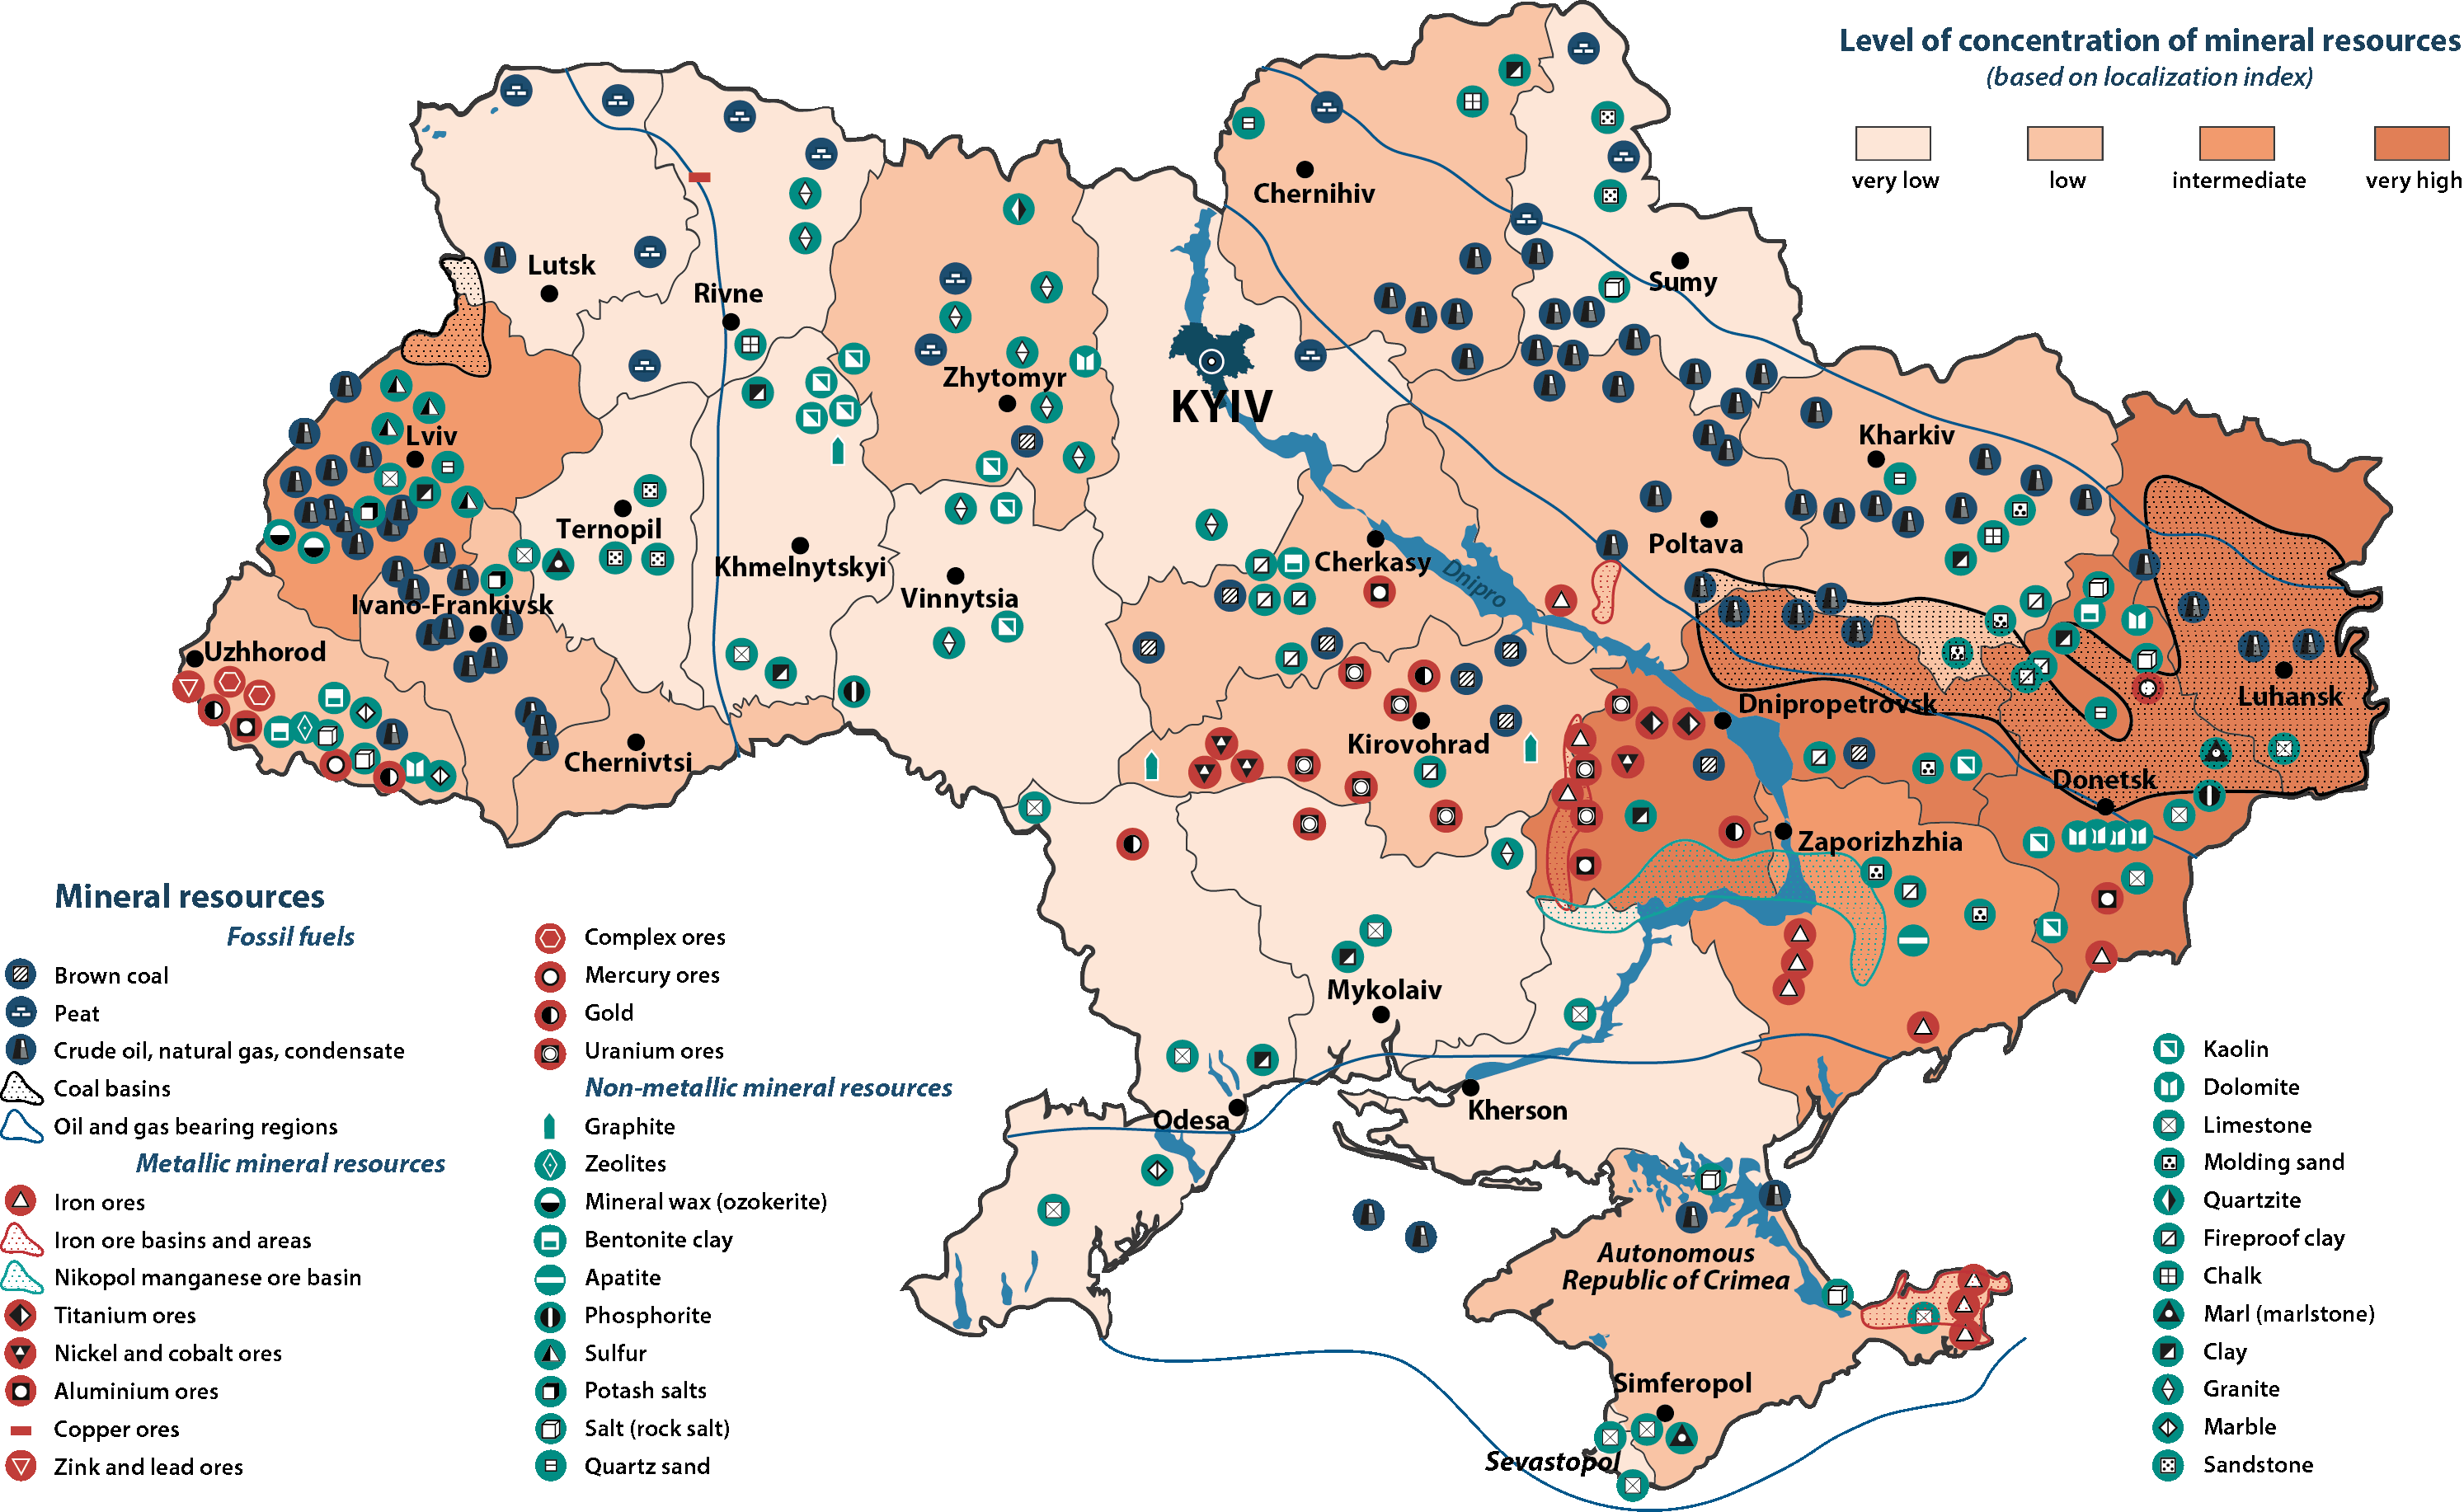 kisspng-ukraine-natural-resource-map-field-natural-minerals-5ad8d429281f39.2237543815241595291644.png